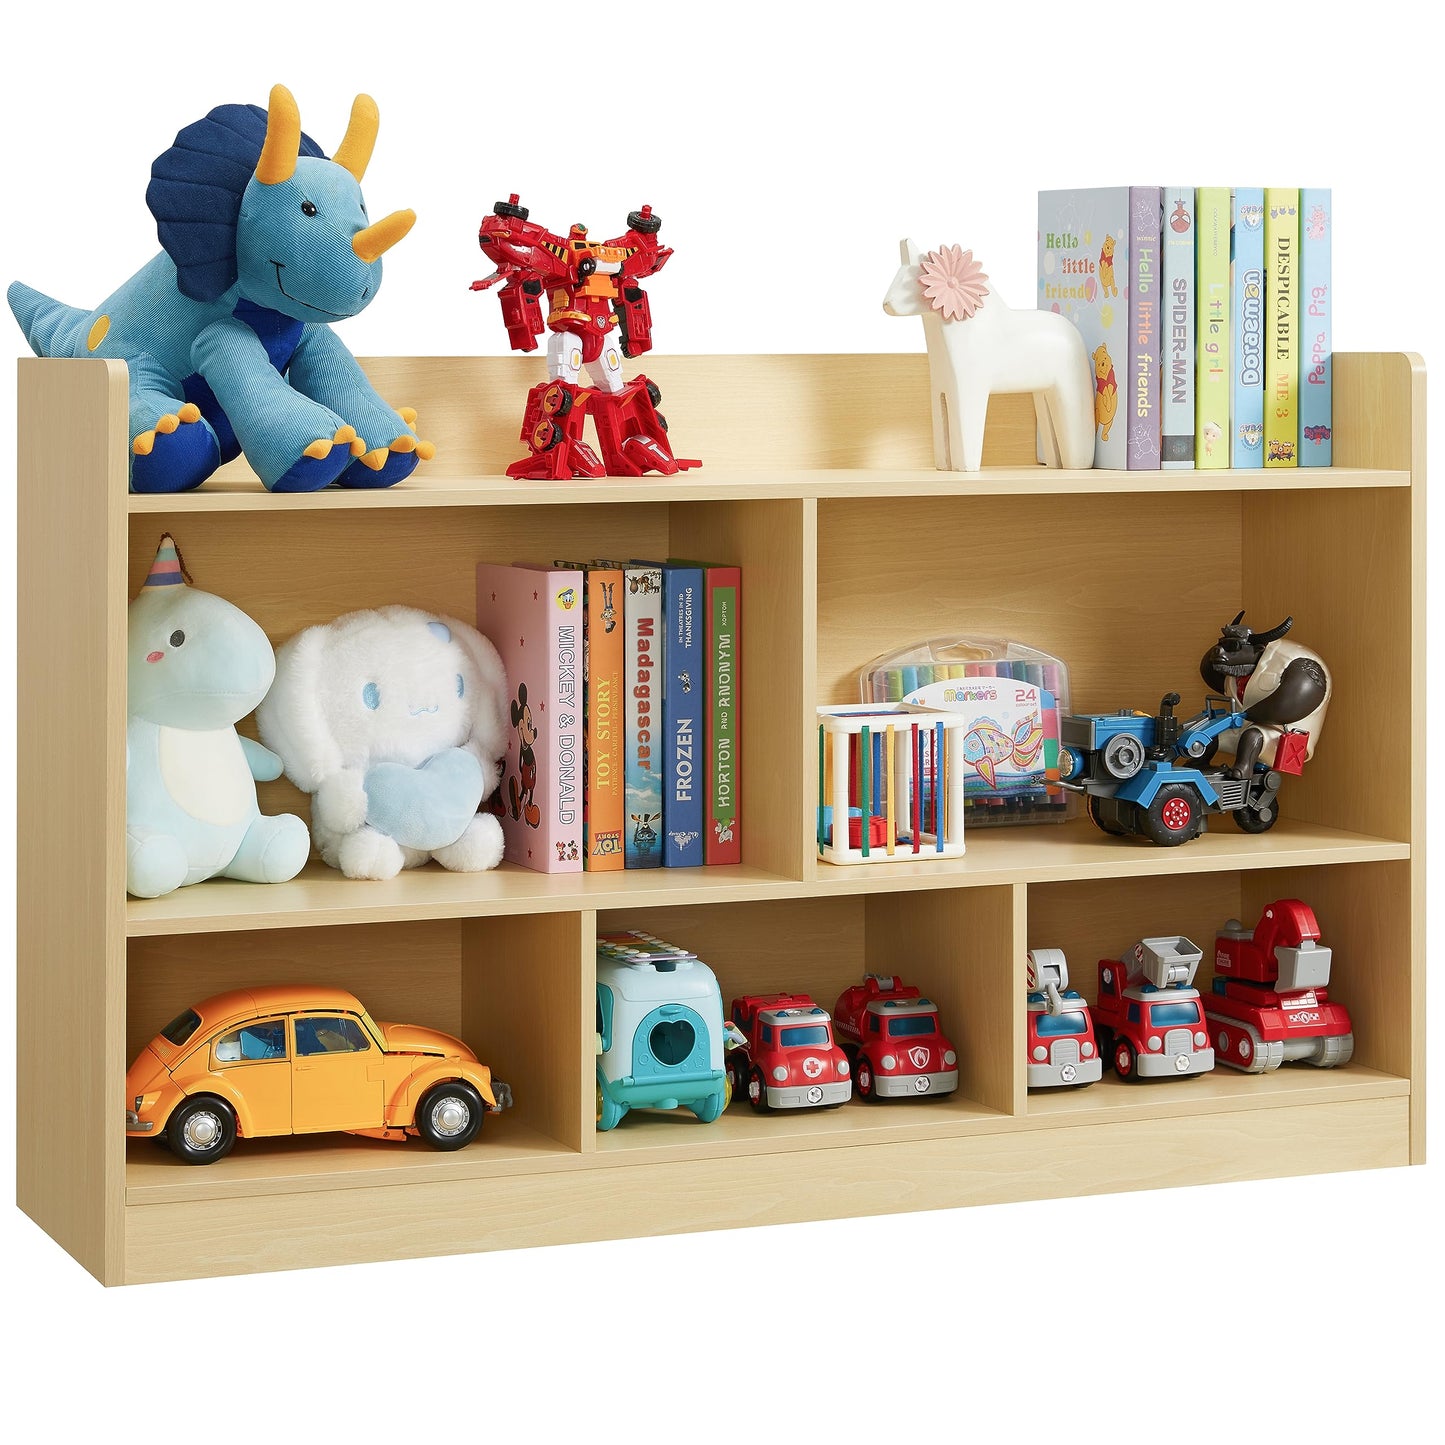 Kids Toy Storage Organizer, 5-Section Bookshelf for Organizing Books Toys, Wooden Storage Cabinet Daycare Furniture for School, Classroom Playroom, Nursery, Kindergarten (Natural)